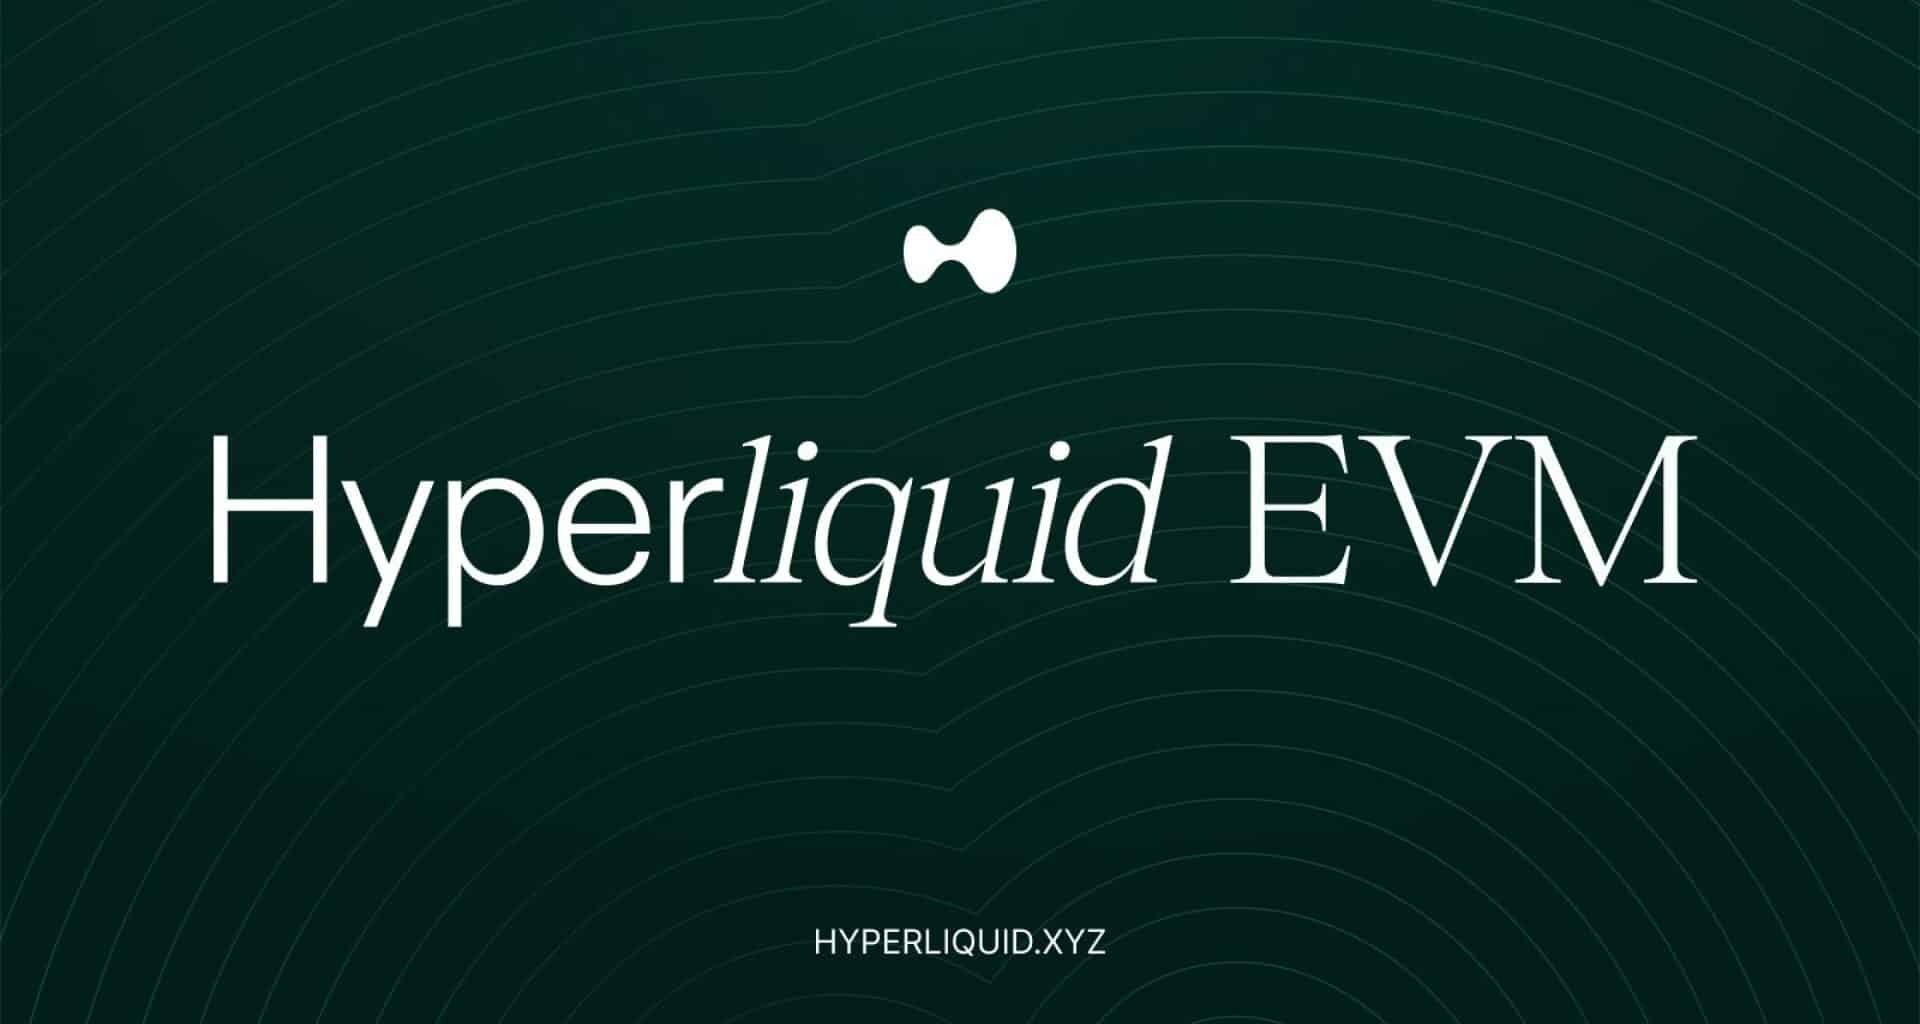 hyperliquid evm layer 1